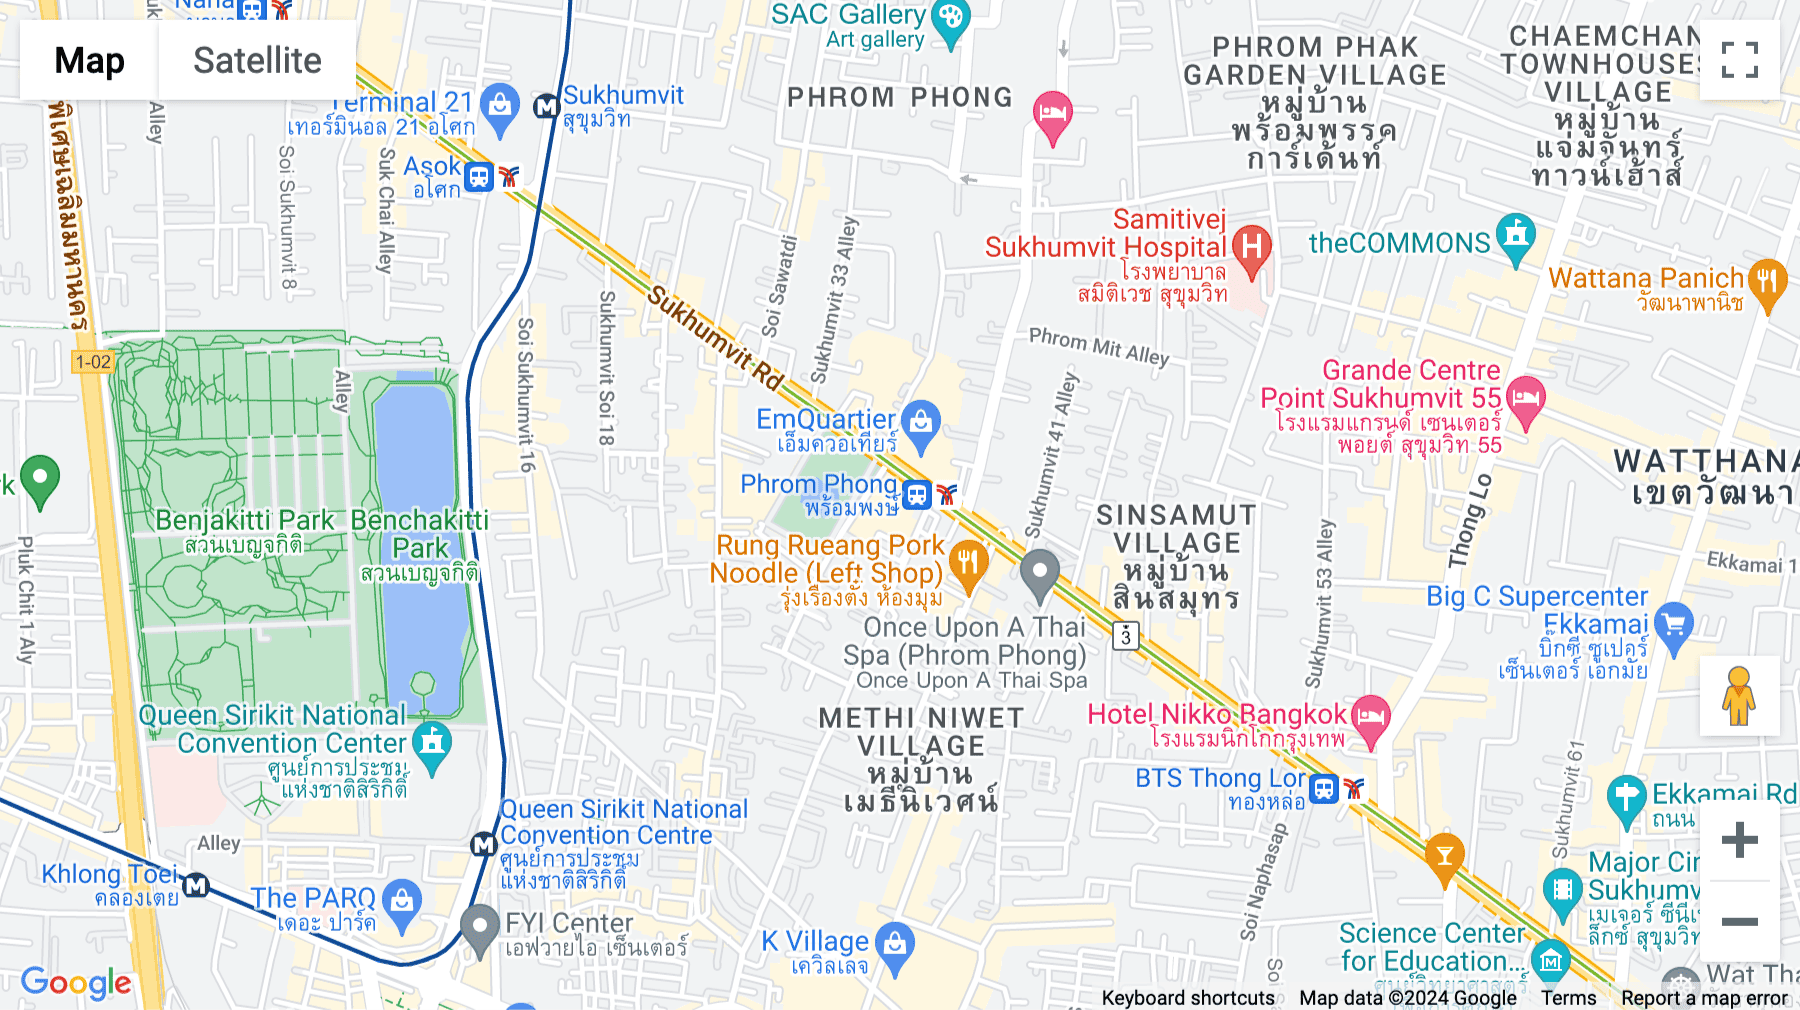 Click for interative map of 622 Emporium Tower, Sukhumvit Road, 21st Floor, Bangkok